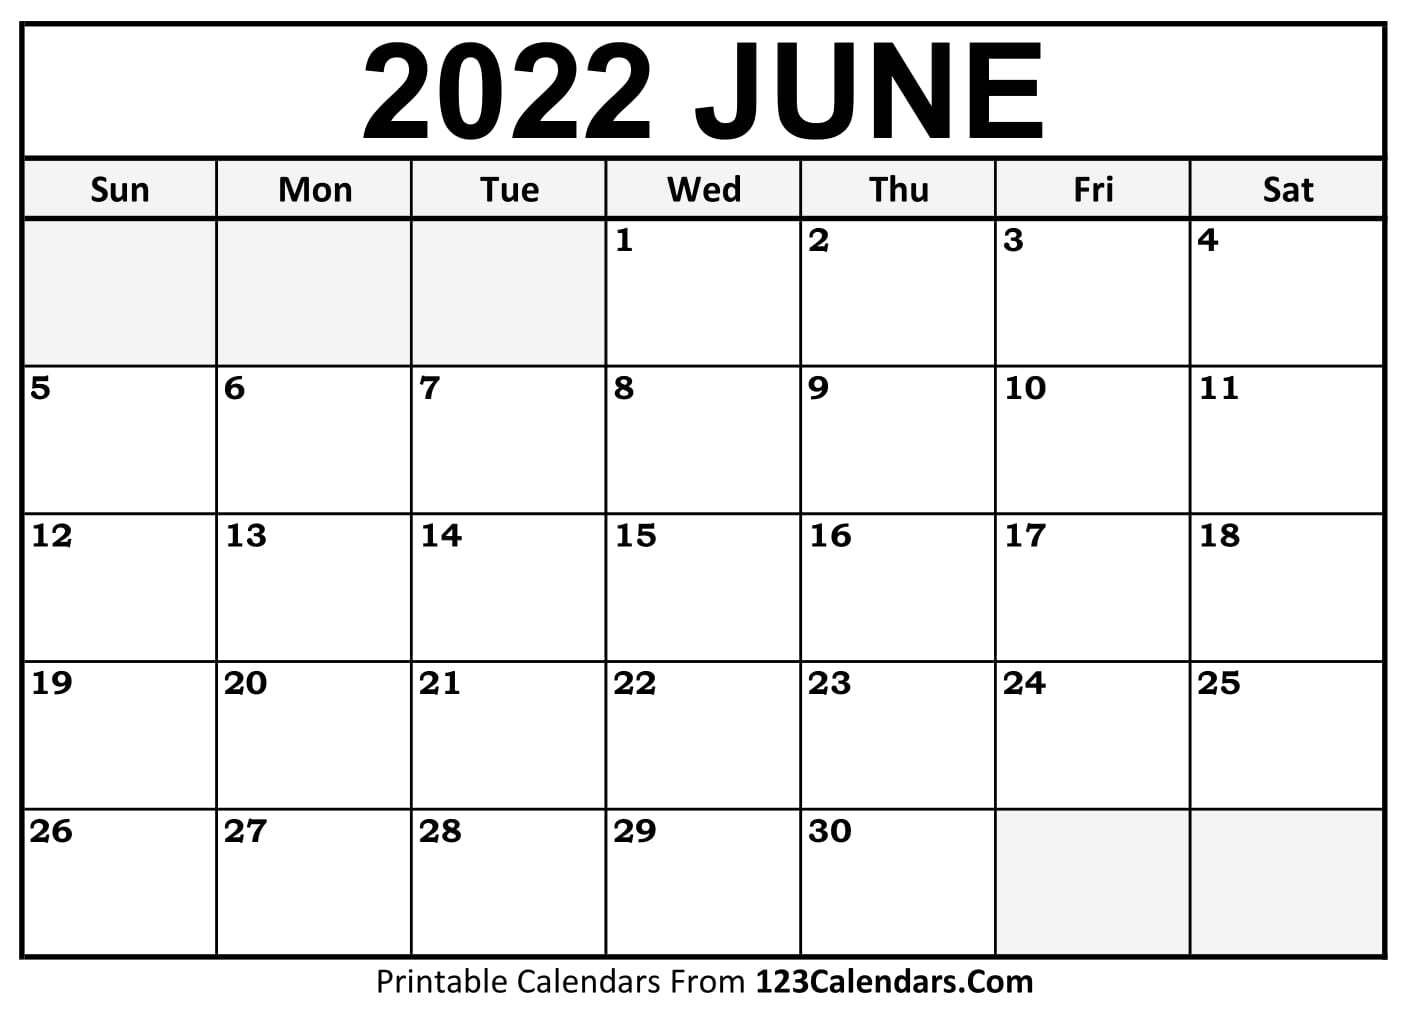 June Calendar Template 2022 Printable June 2022 Calendar Templates - 123Calendars.com